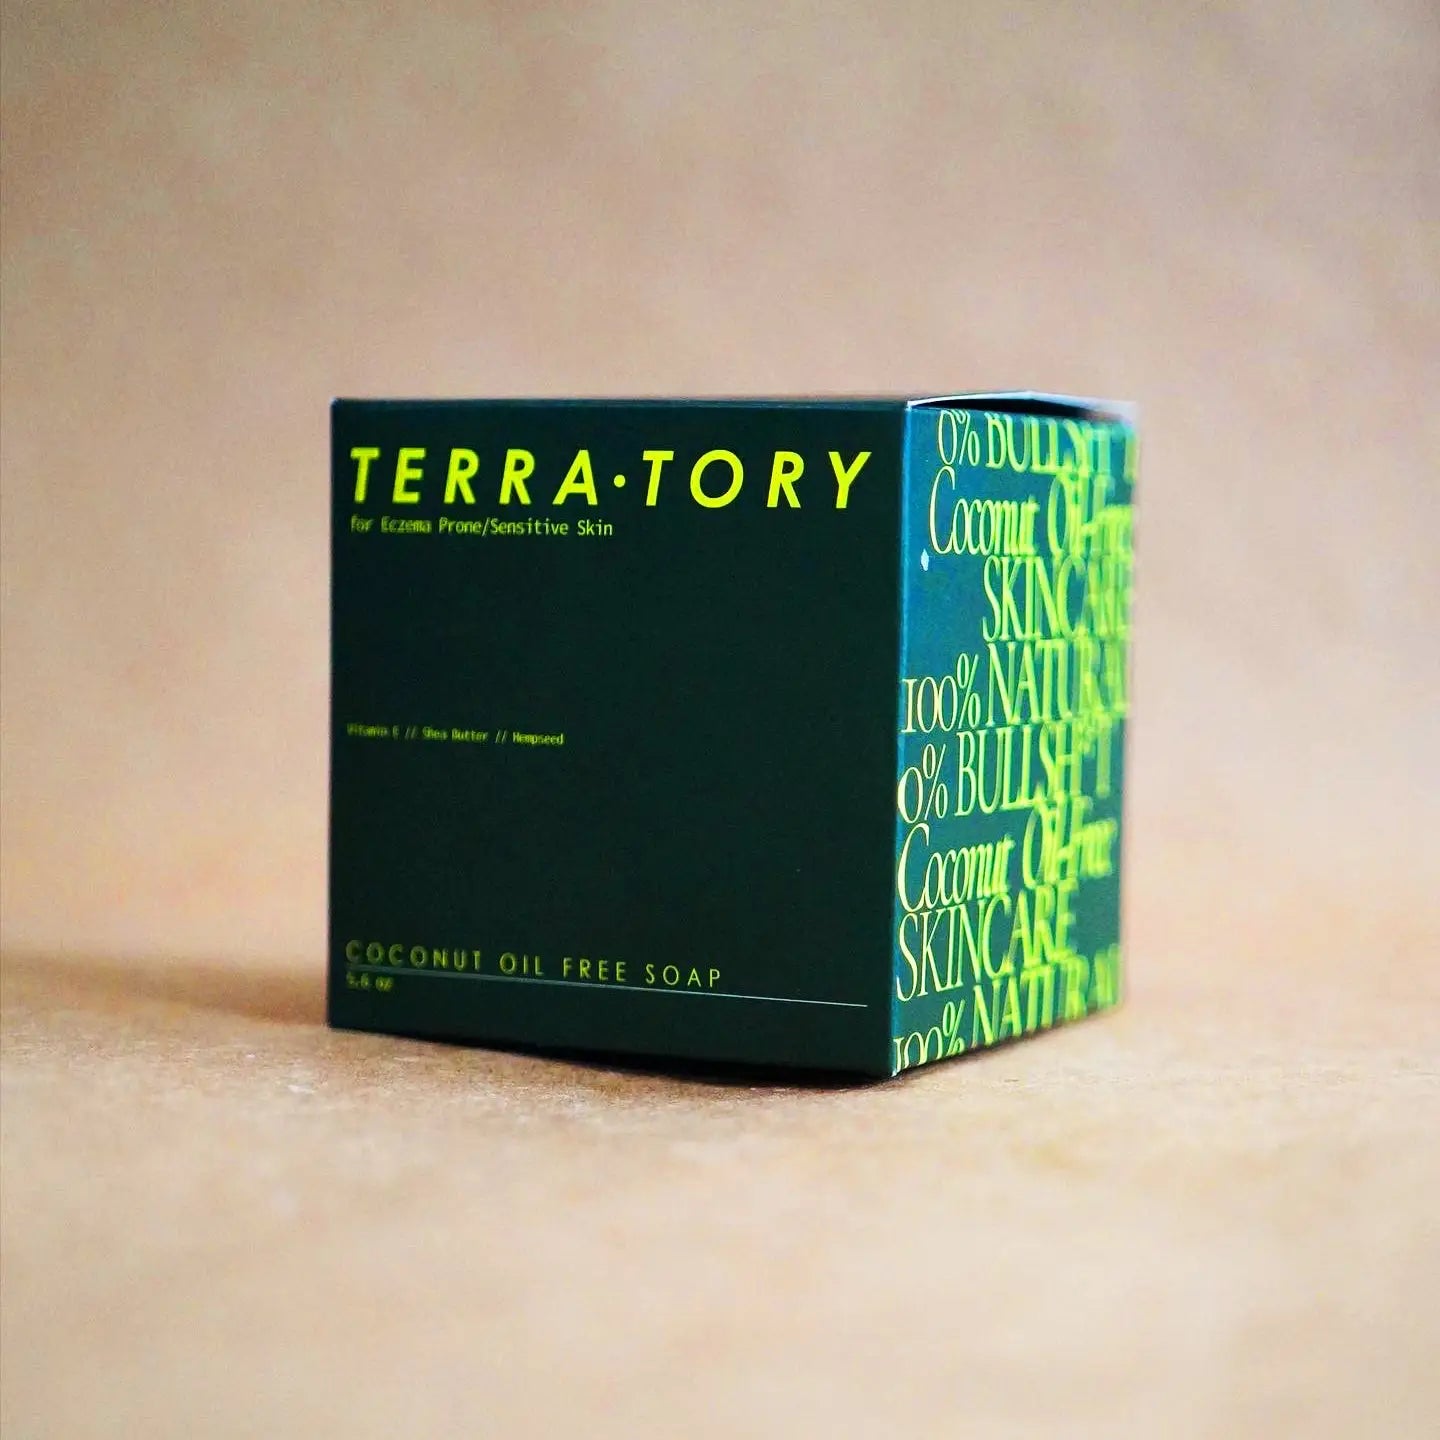 Terra - Tory Skincare Aloe Detox Soap Cube | Prelude and Dawn Los Angeles, CA